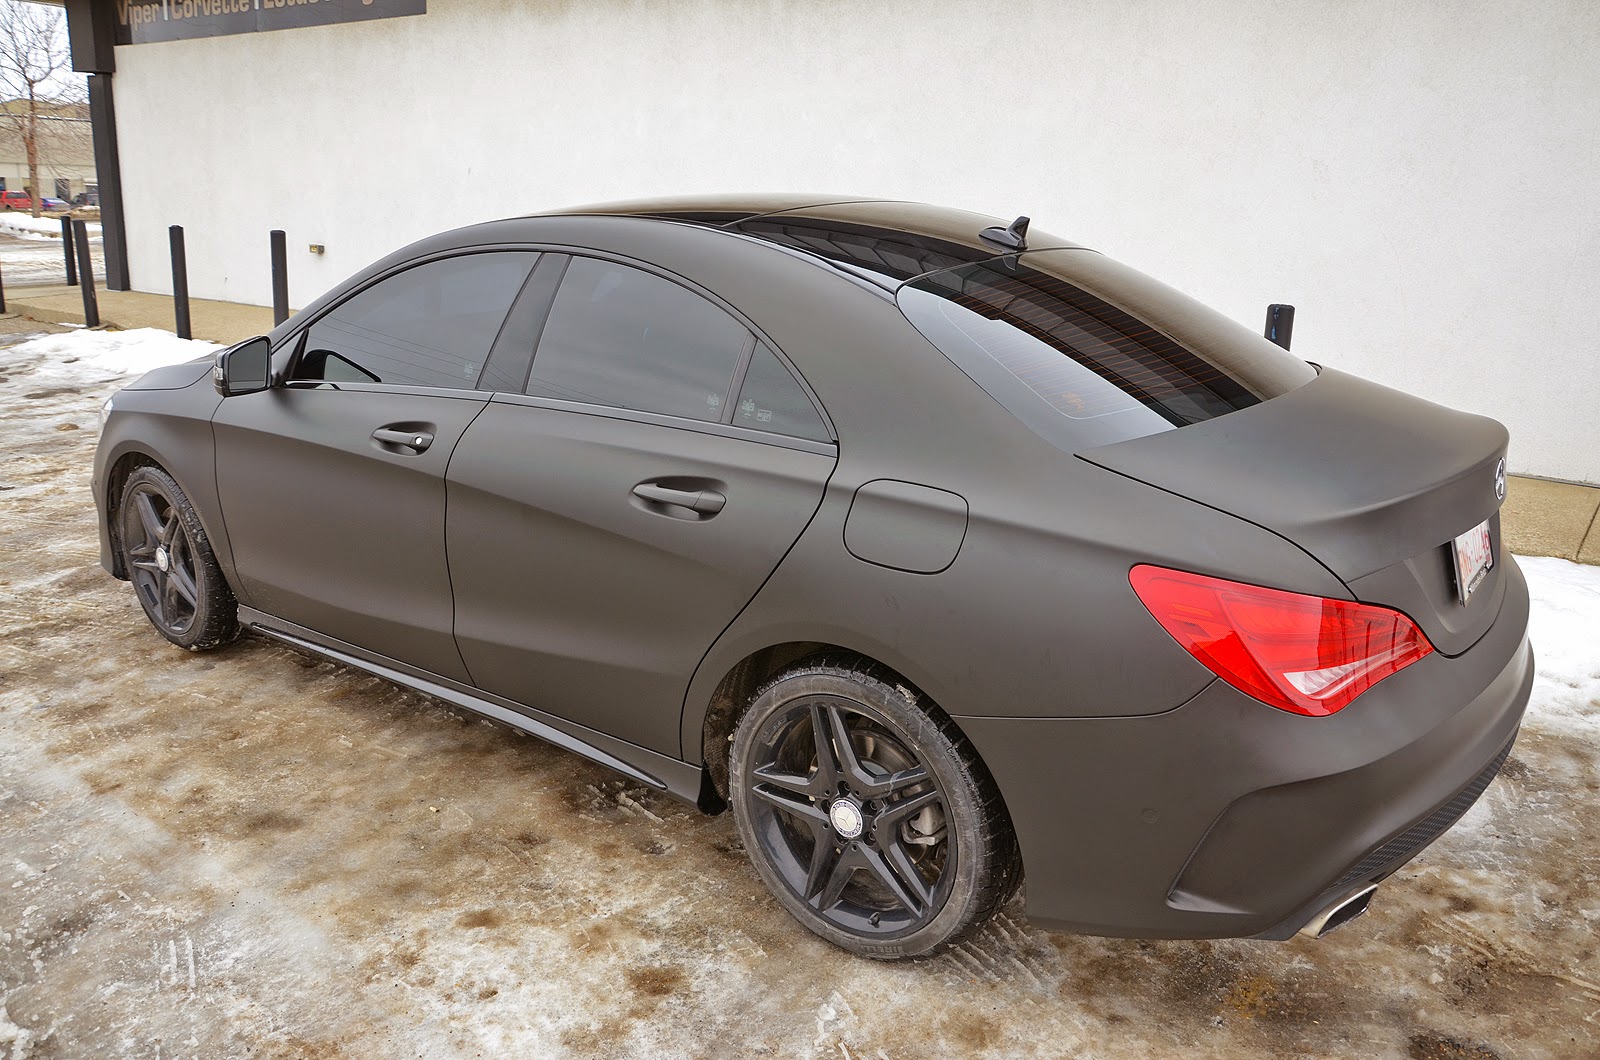 Plicht te binden Aardbei ZR Auto Blog: Sinister Matte Black Wrapped Mercedes CLA 250 4Matic